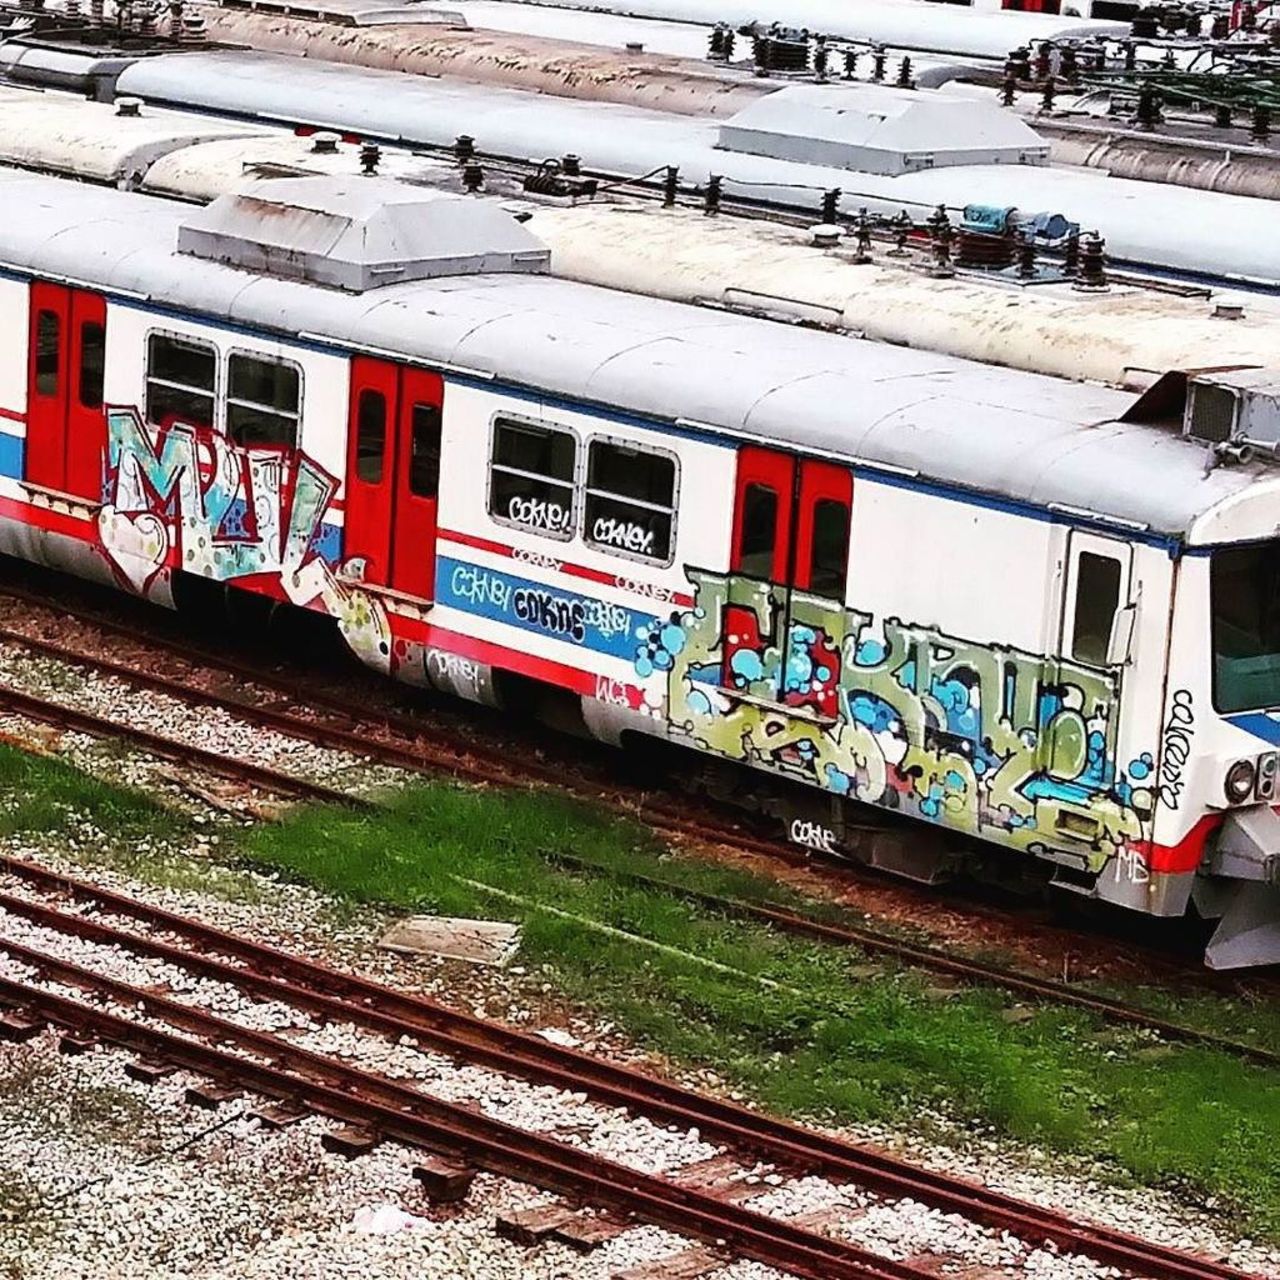 #train #dsb_graff @rsa_graffiti #ingf@streetawesome #streetart #urbanart #graffitiart #graffiti #instagraffiti #str… https://t.co/V62RsSfeW9